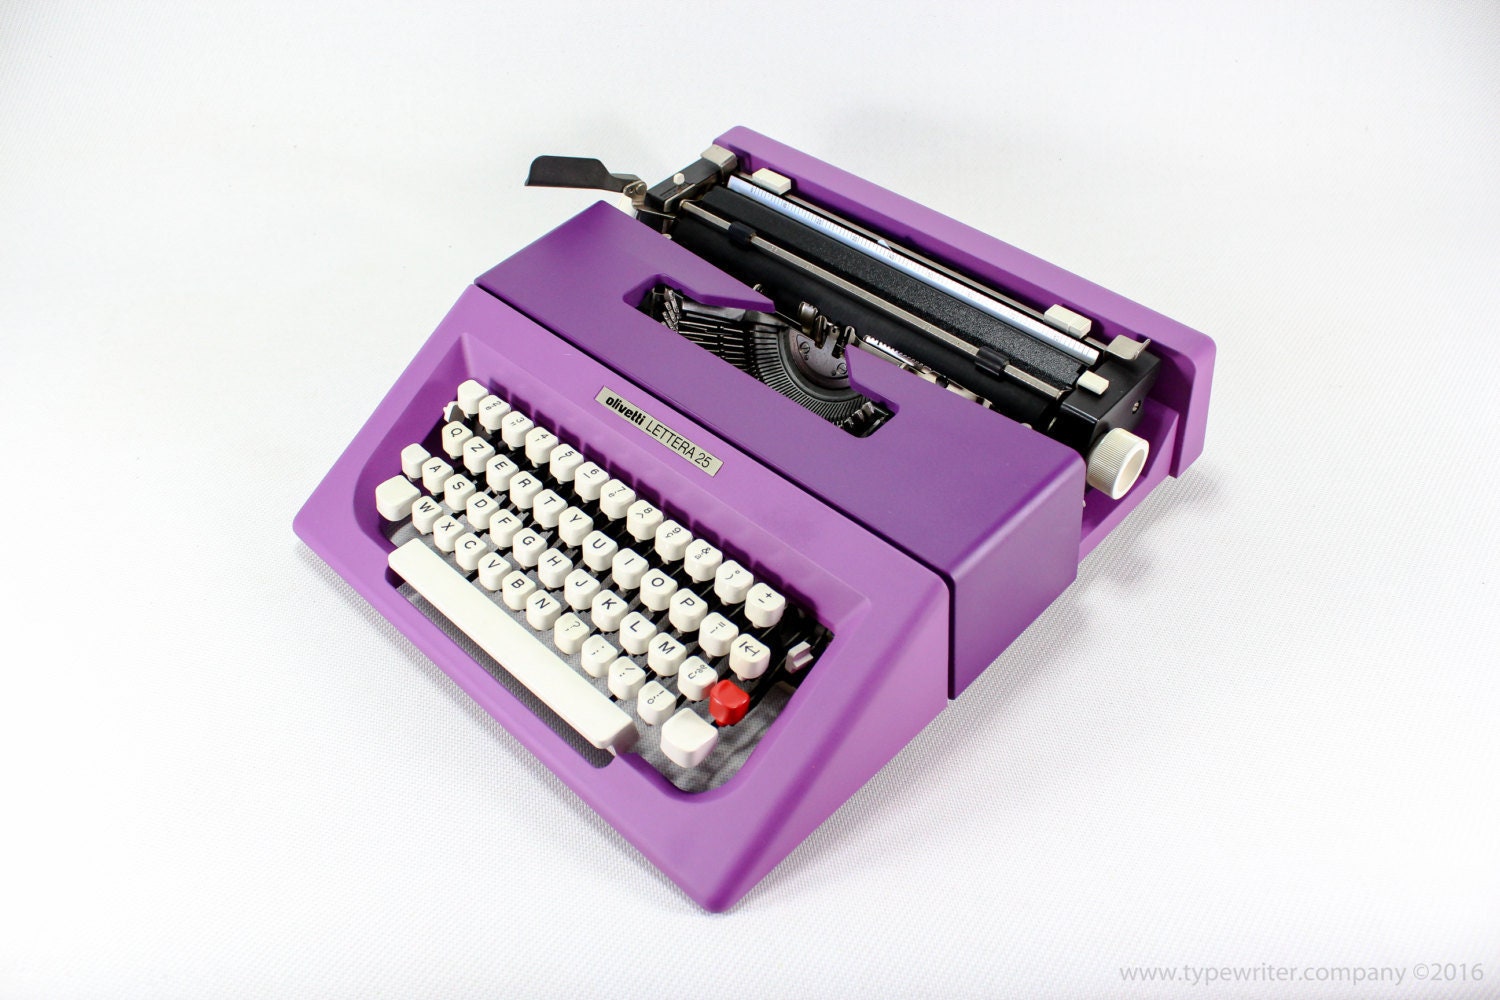 Best Gift Typewriter.company Working Typewriter -Olivetti Lettera 25 - Violet Vintage Working Gift Qwerty